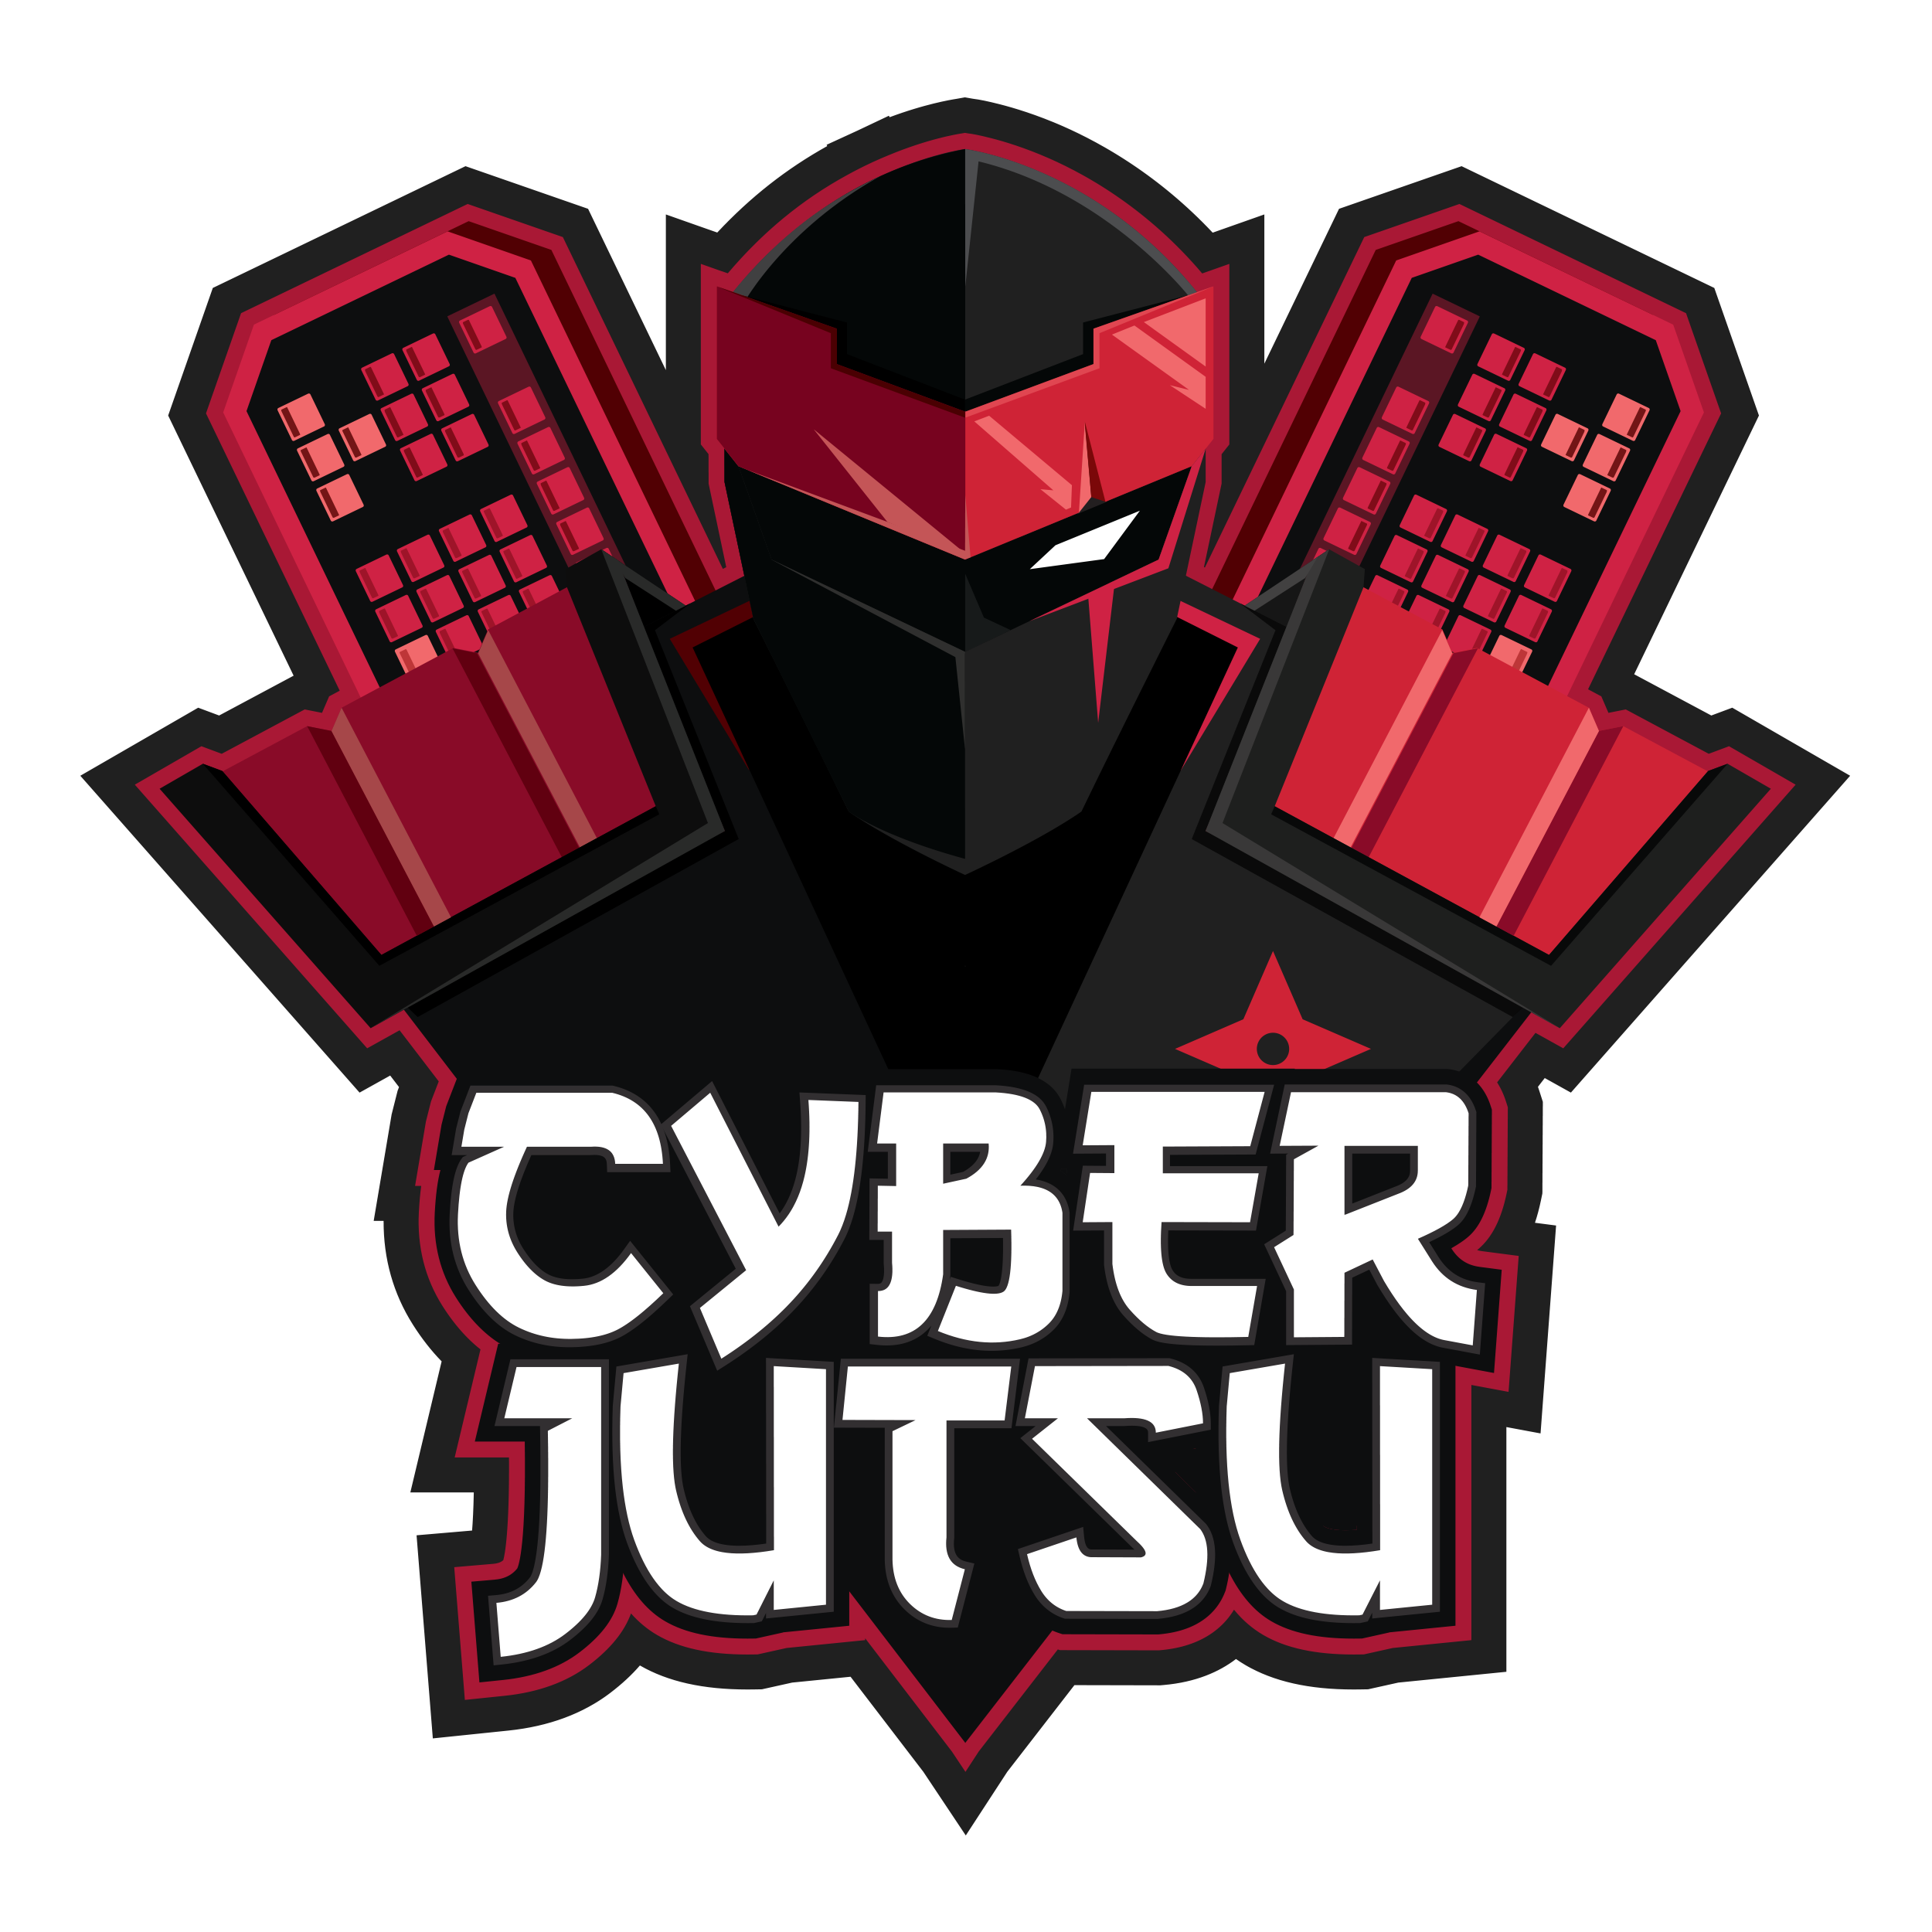 Cyber Jutsu